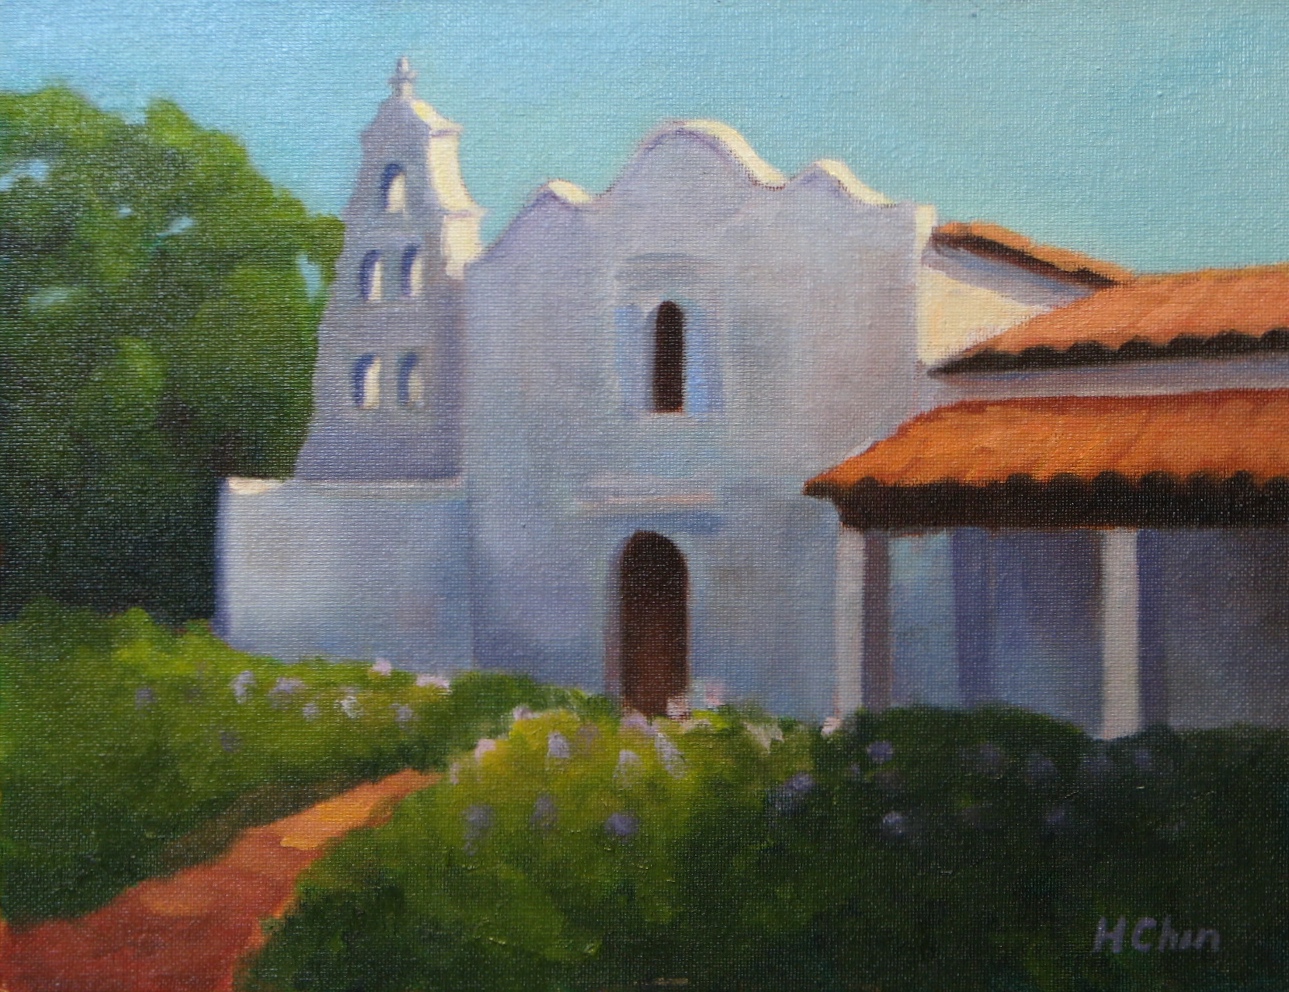 "Mission San Diego de Alcala" - 9 x 12